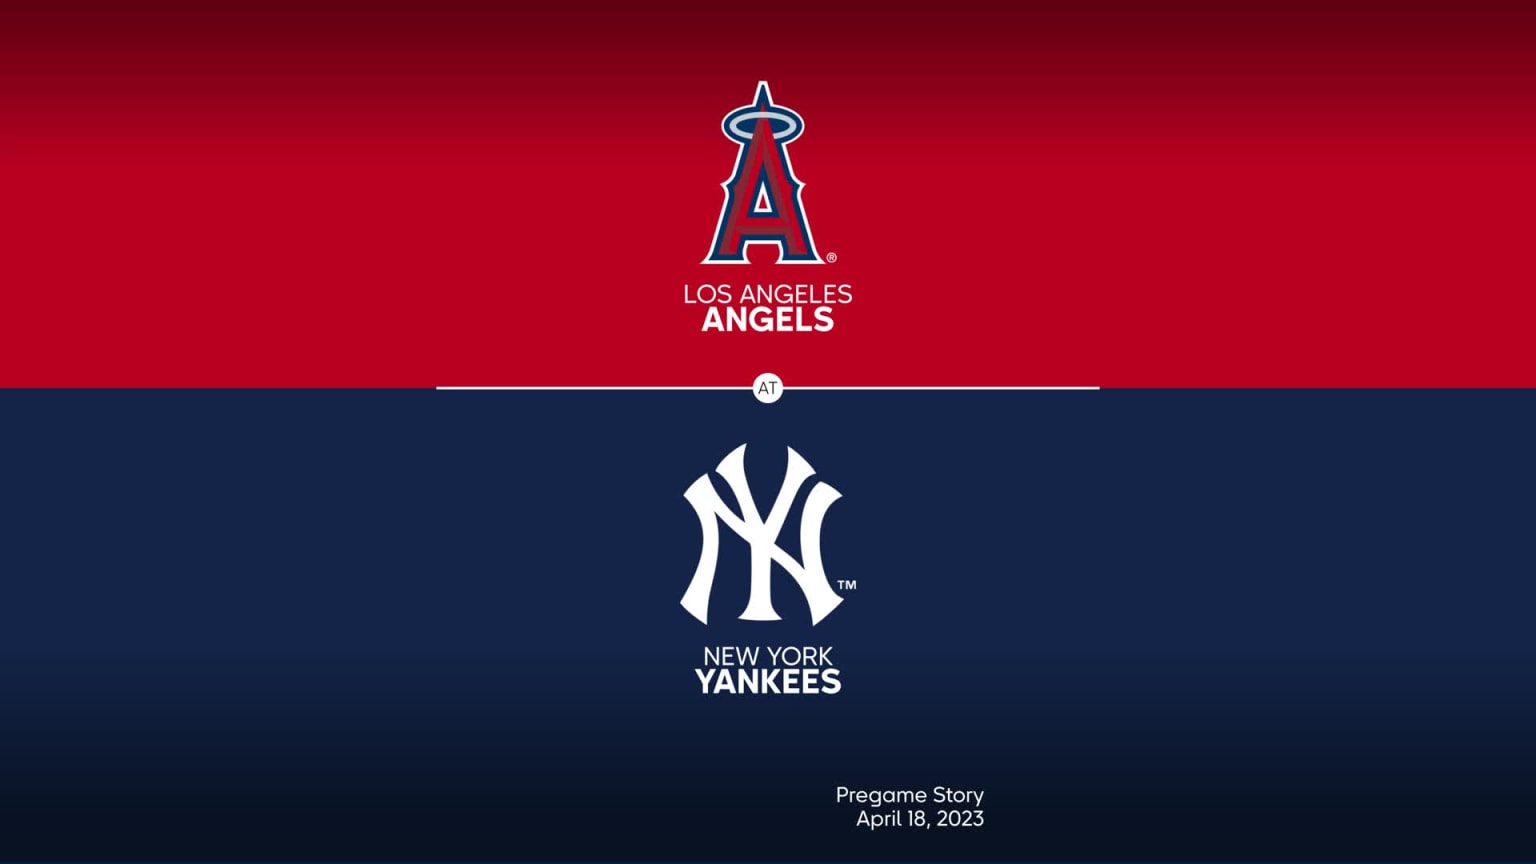 Angels at Yankees April 18, 2023 Title Slate 04/16/2023